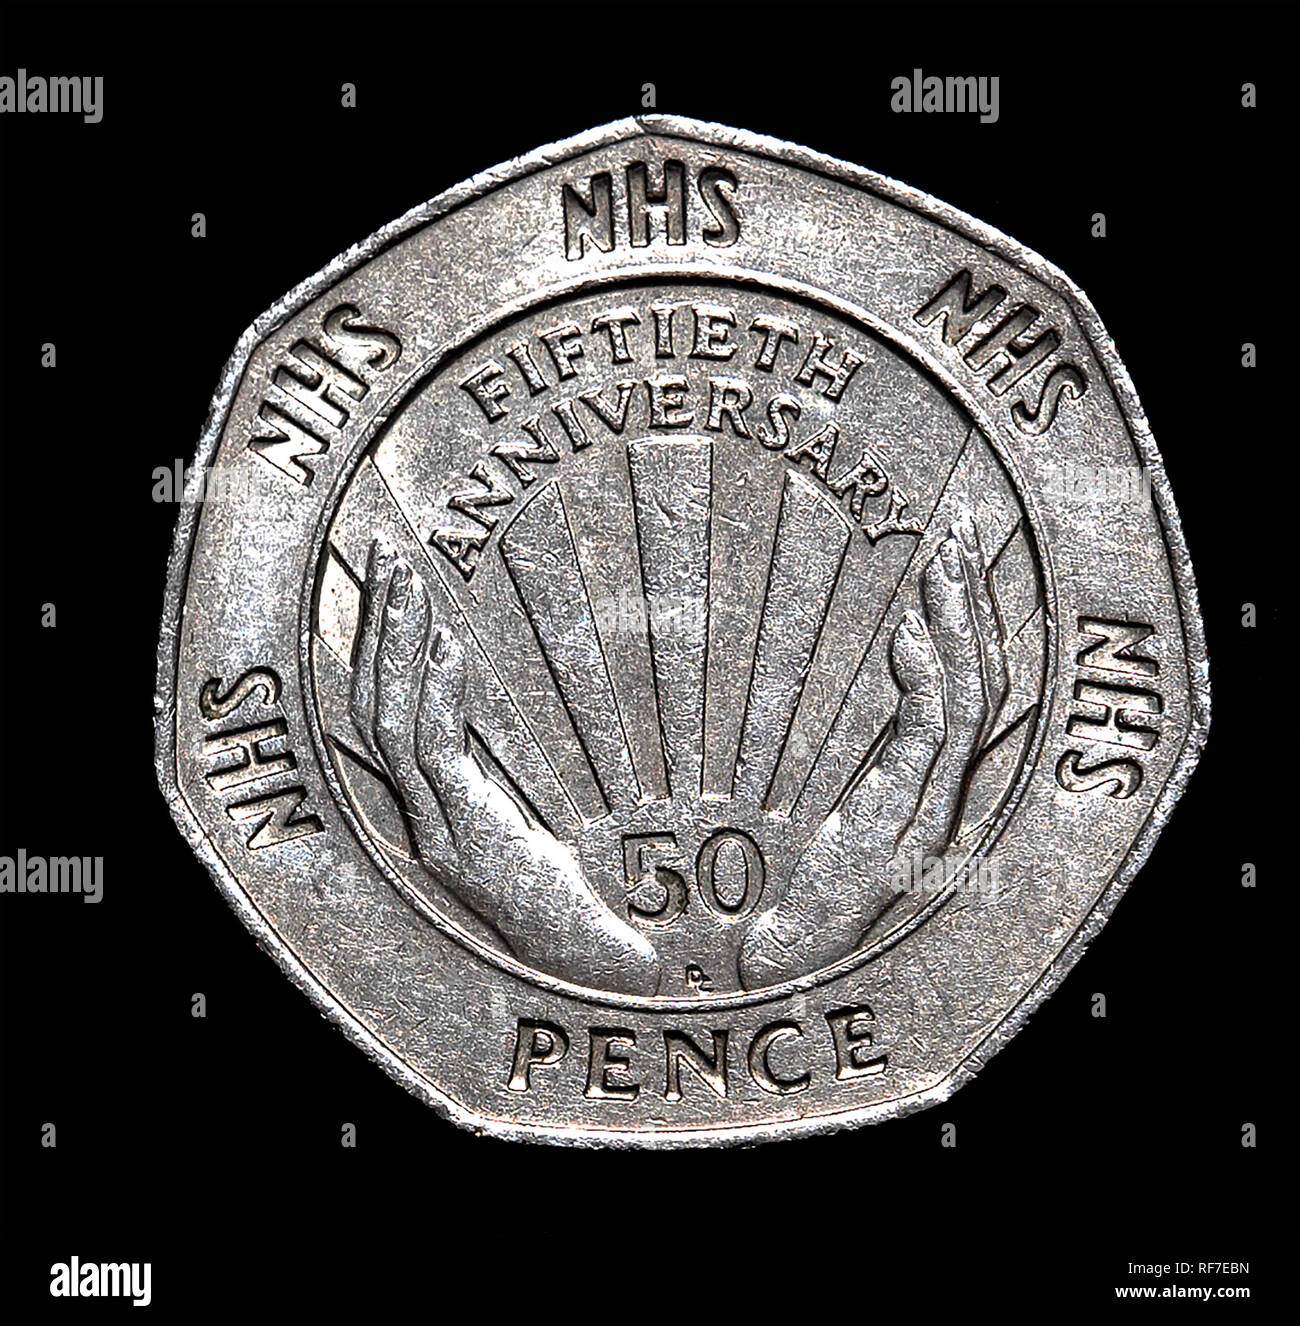 UK commemorative 50 pence coin celebrating the National Health Service. Stock Photo